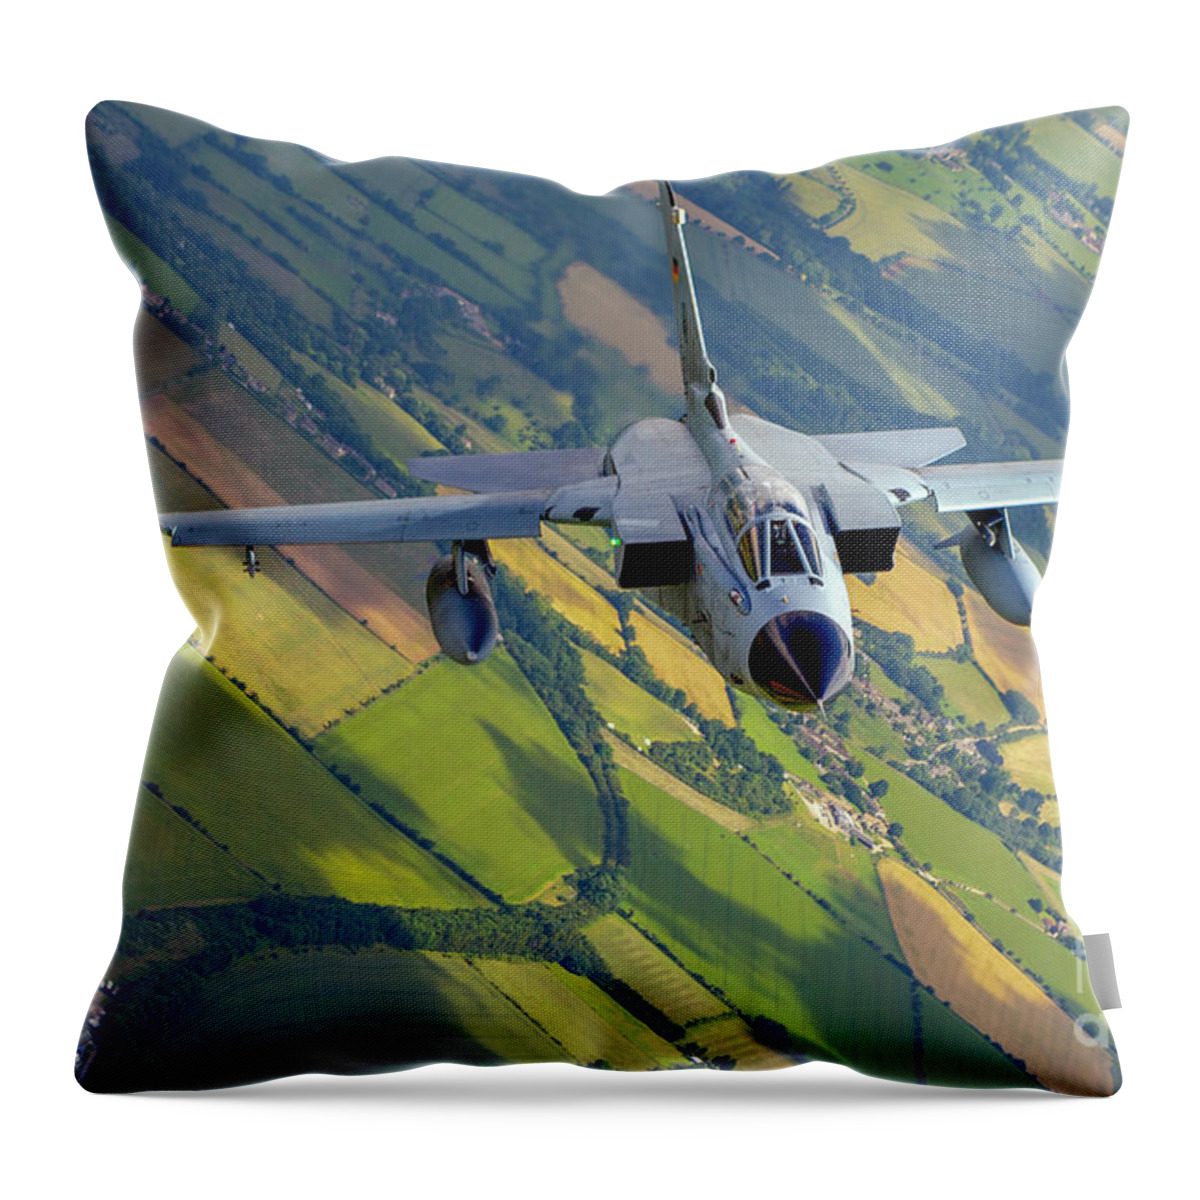 German Throw Pillow featuring the photograph German Air Force, Panavia Tornado b9 by Nir Ben-Yosef